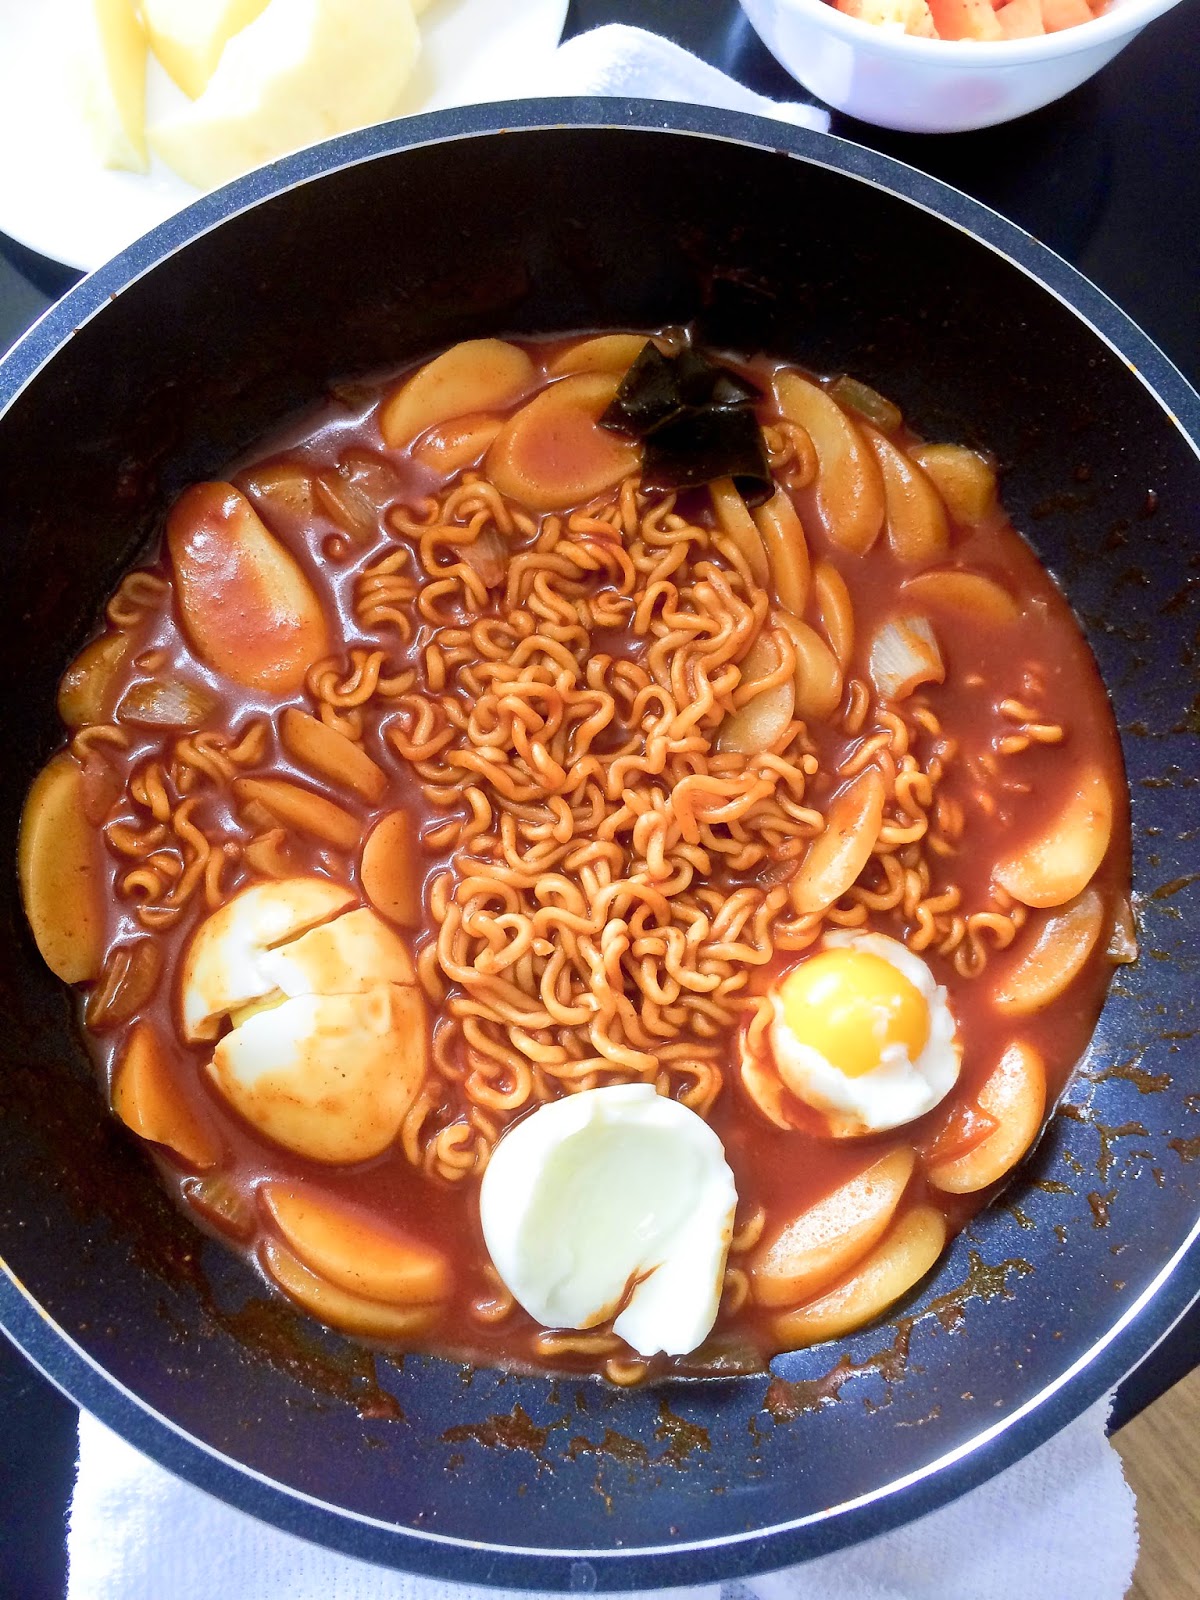 Tteokbokki: The Beloved Spicy, Chewy Rice Cake Dish of Korea